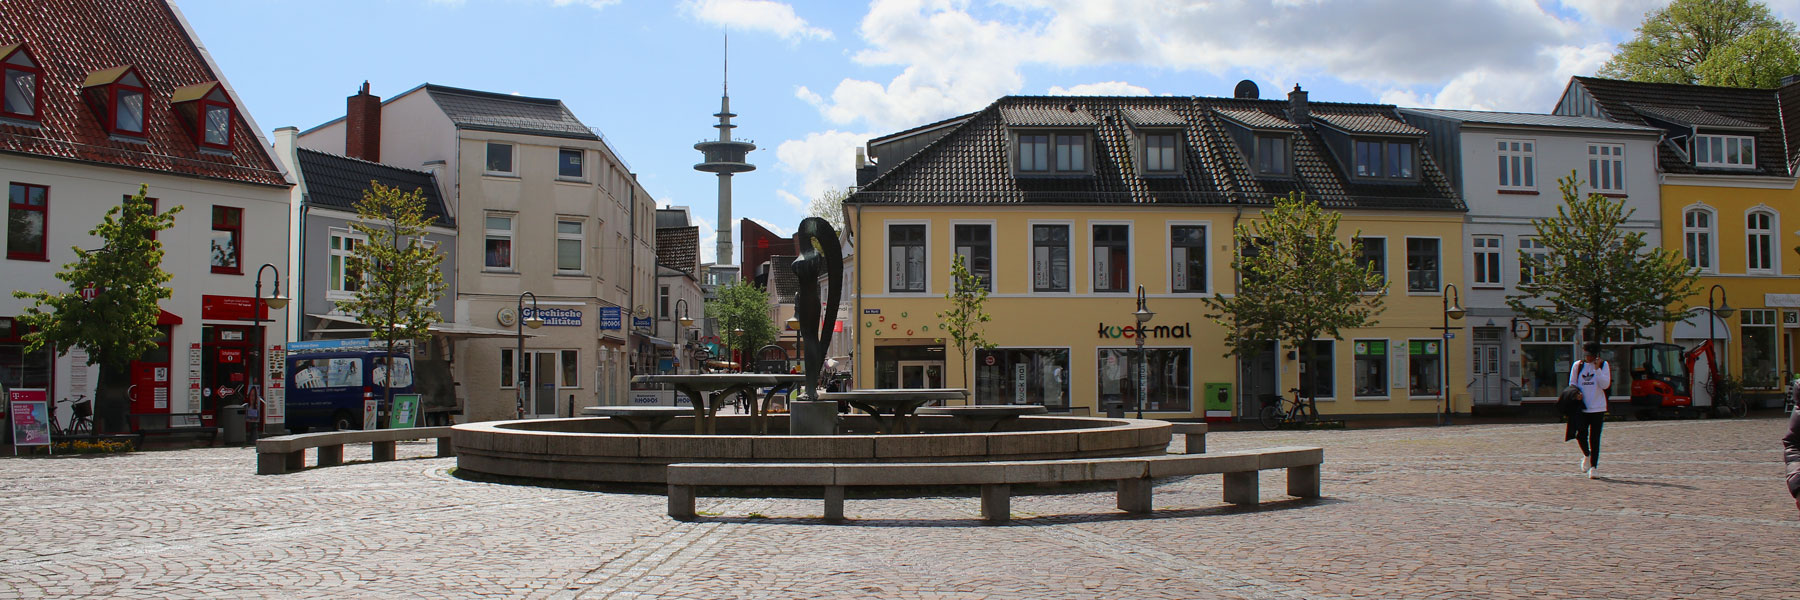 Marktplatz Bad Segeberg